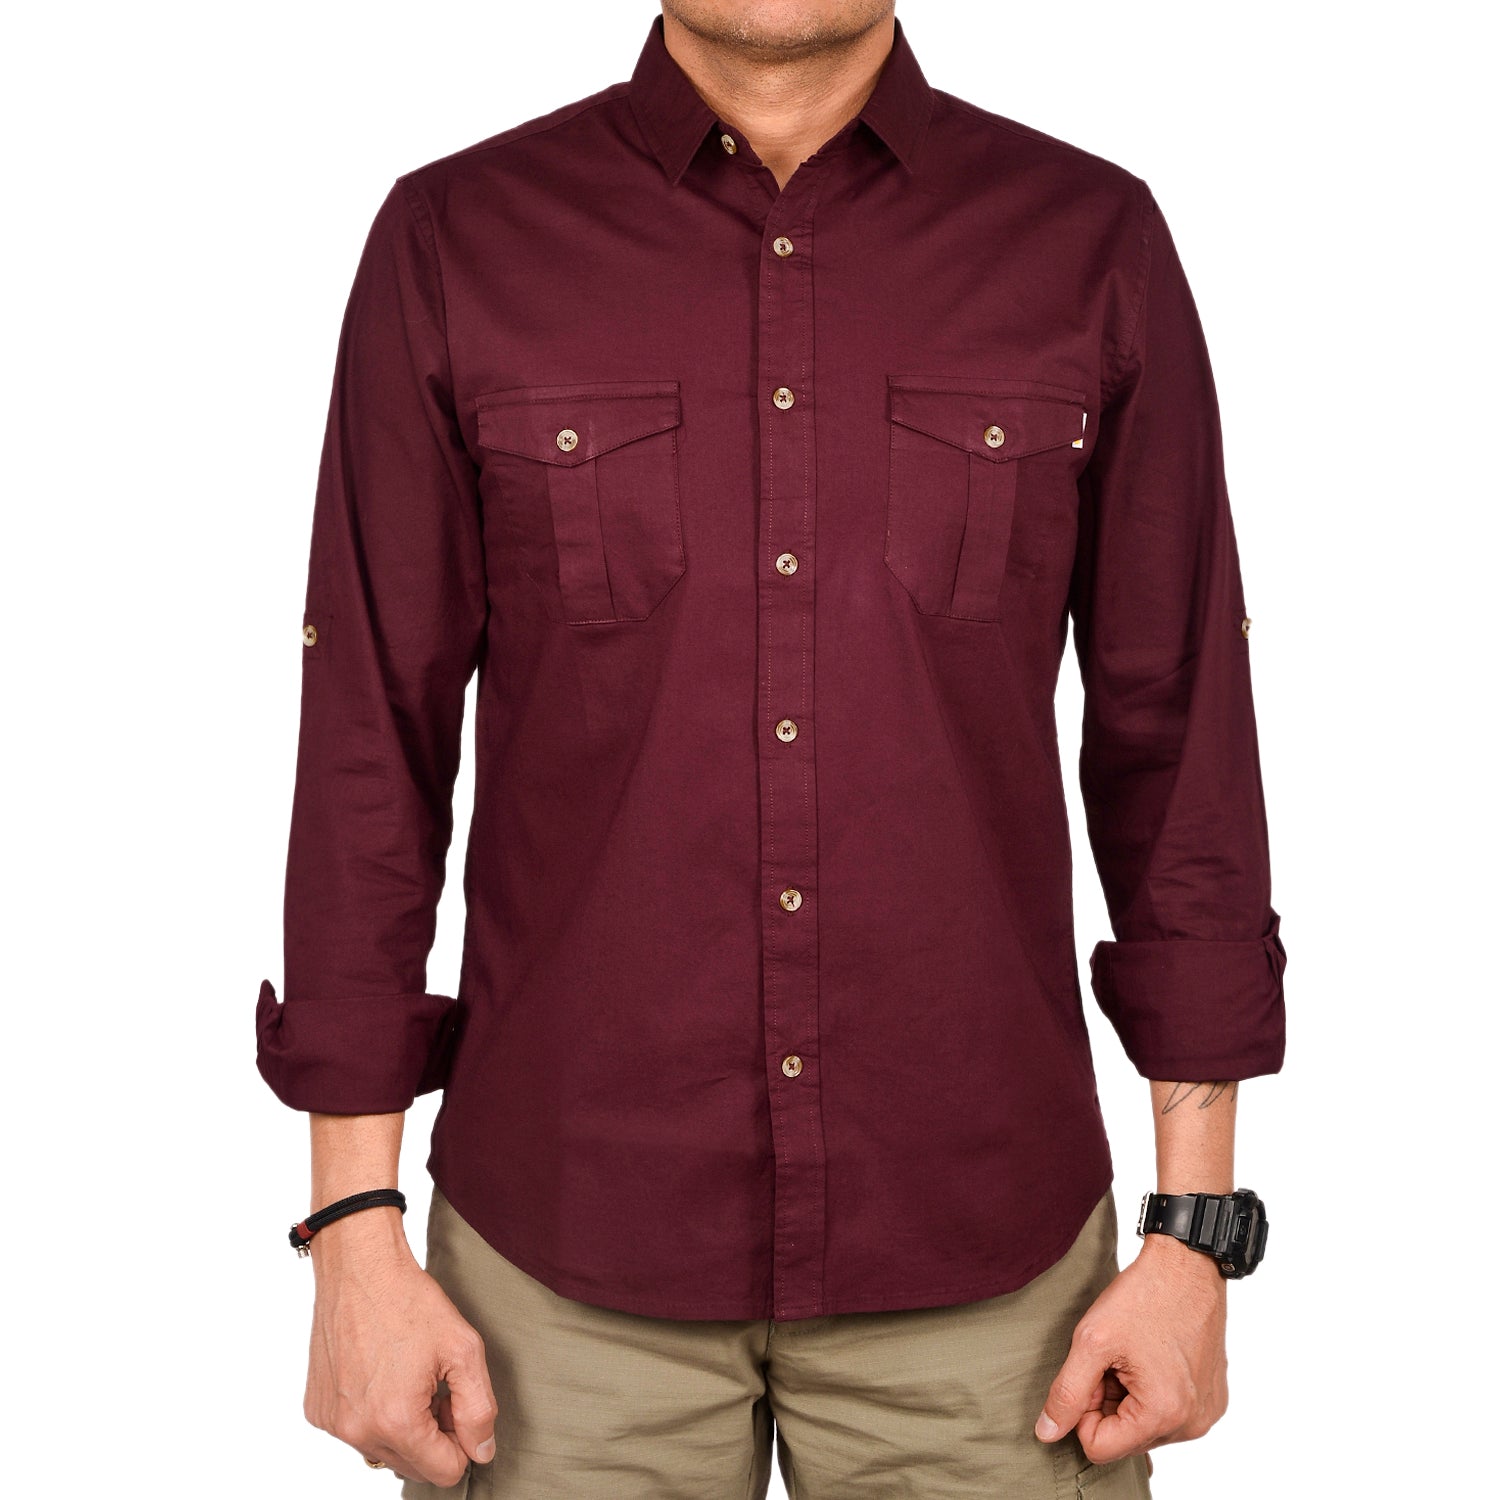 Buy Gokyo Corbett Cargo Full Sleeve Shirt Maroon | Shirts at Gokyo Outdoor Clothing & Gear